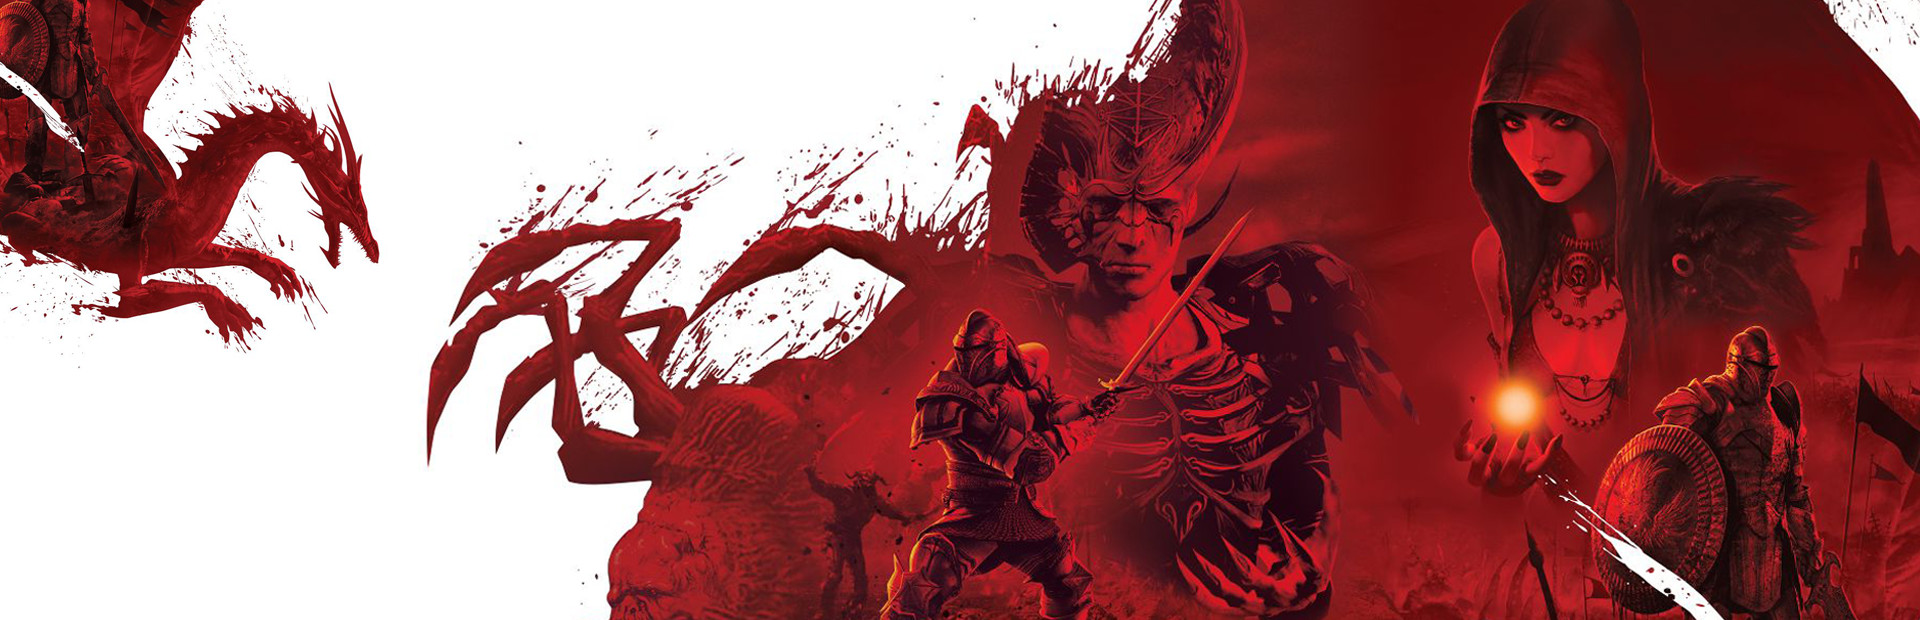 Dragon Age: Origins - Ultimate Edition cover image